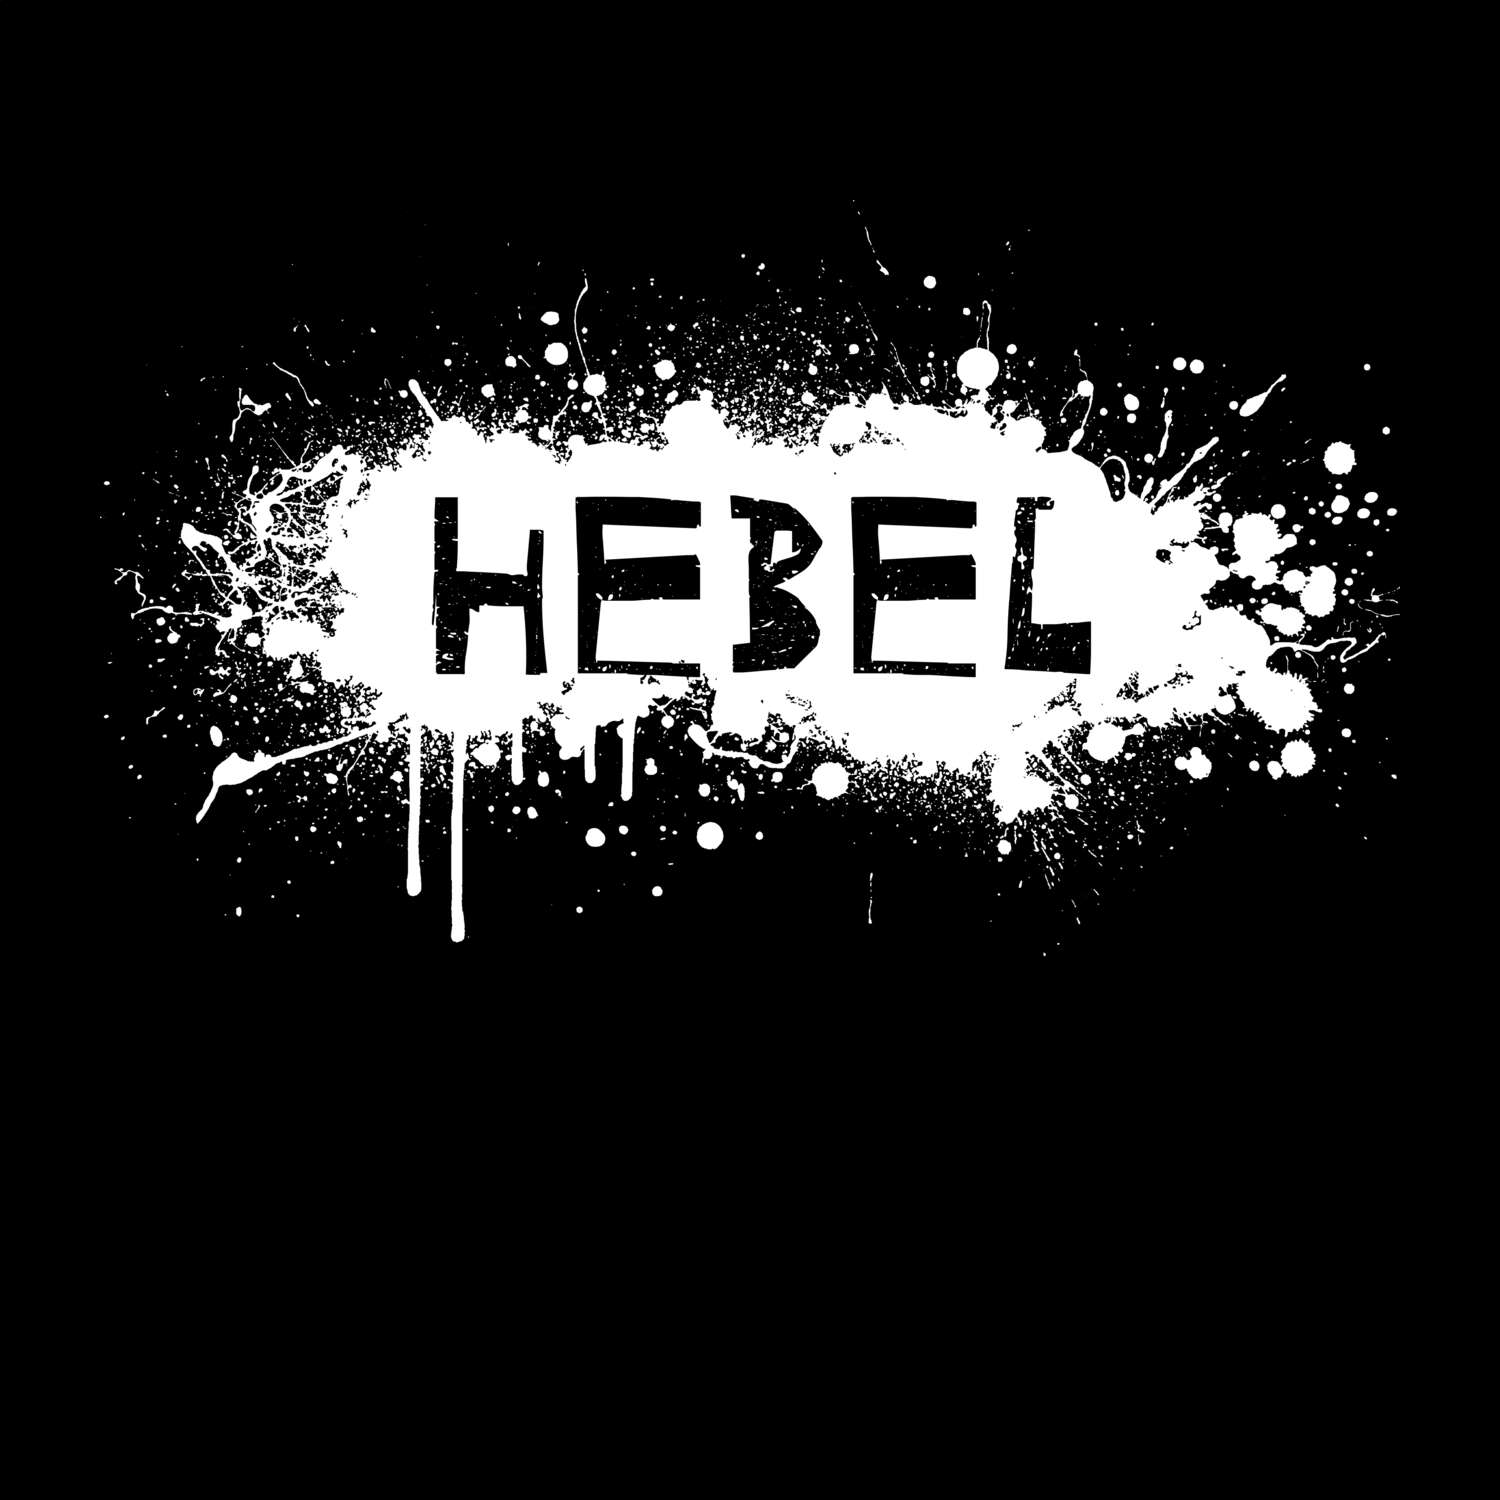 Hebel T-Shirt »Paint Splash Punk«